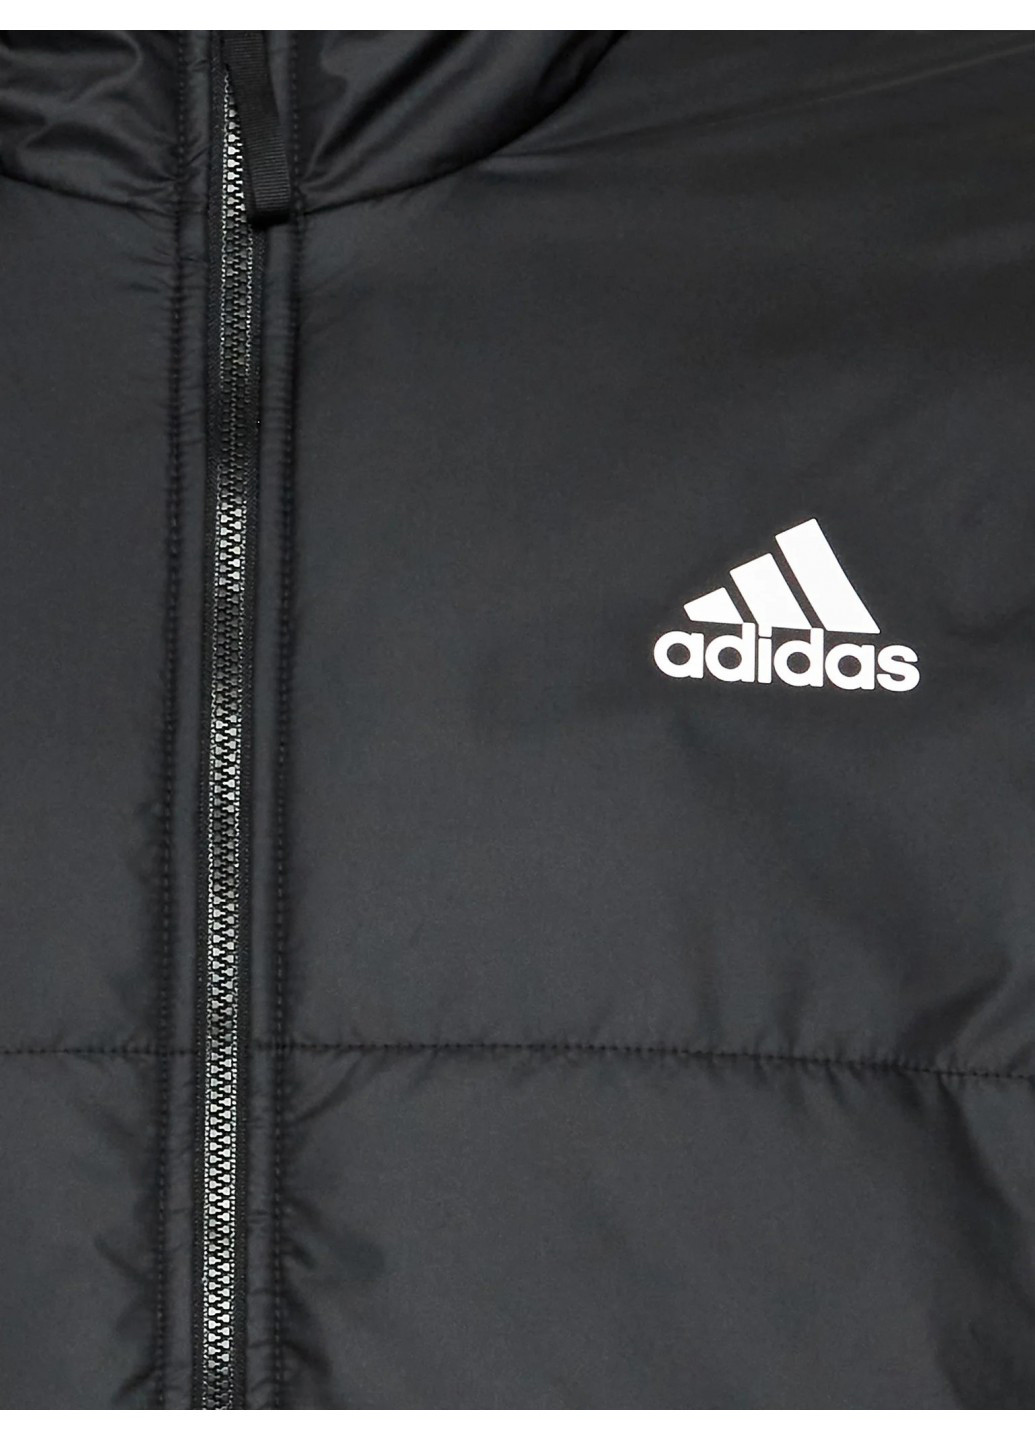 Черная зимняя куртка adidas BSC 3S INS JKT BLACK